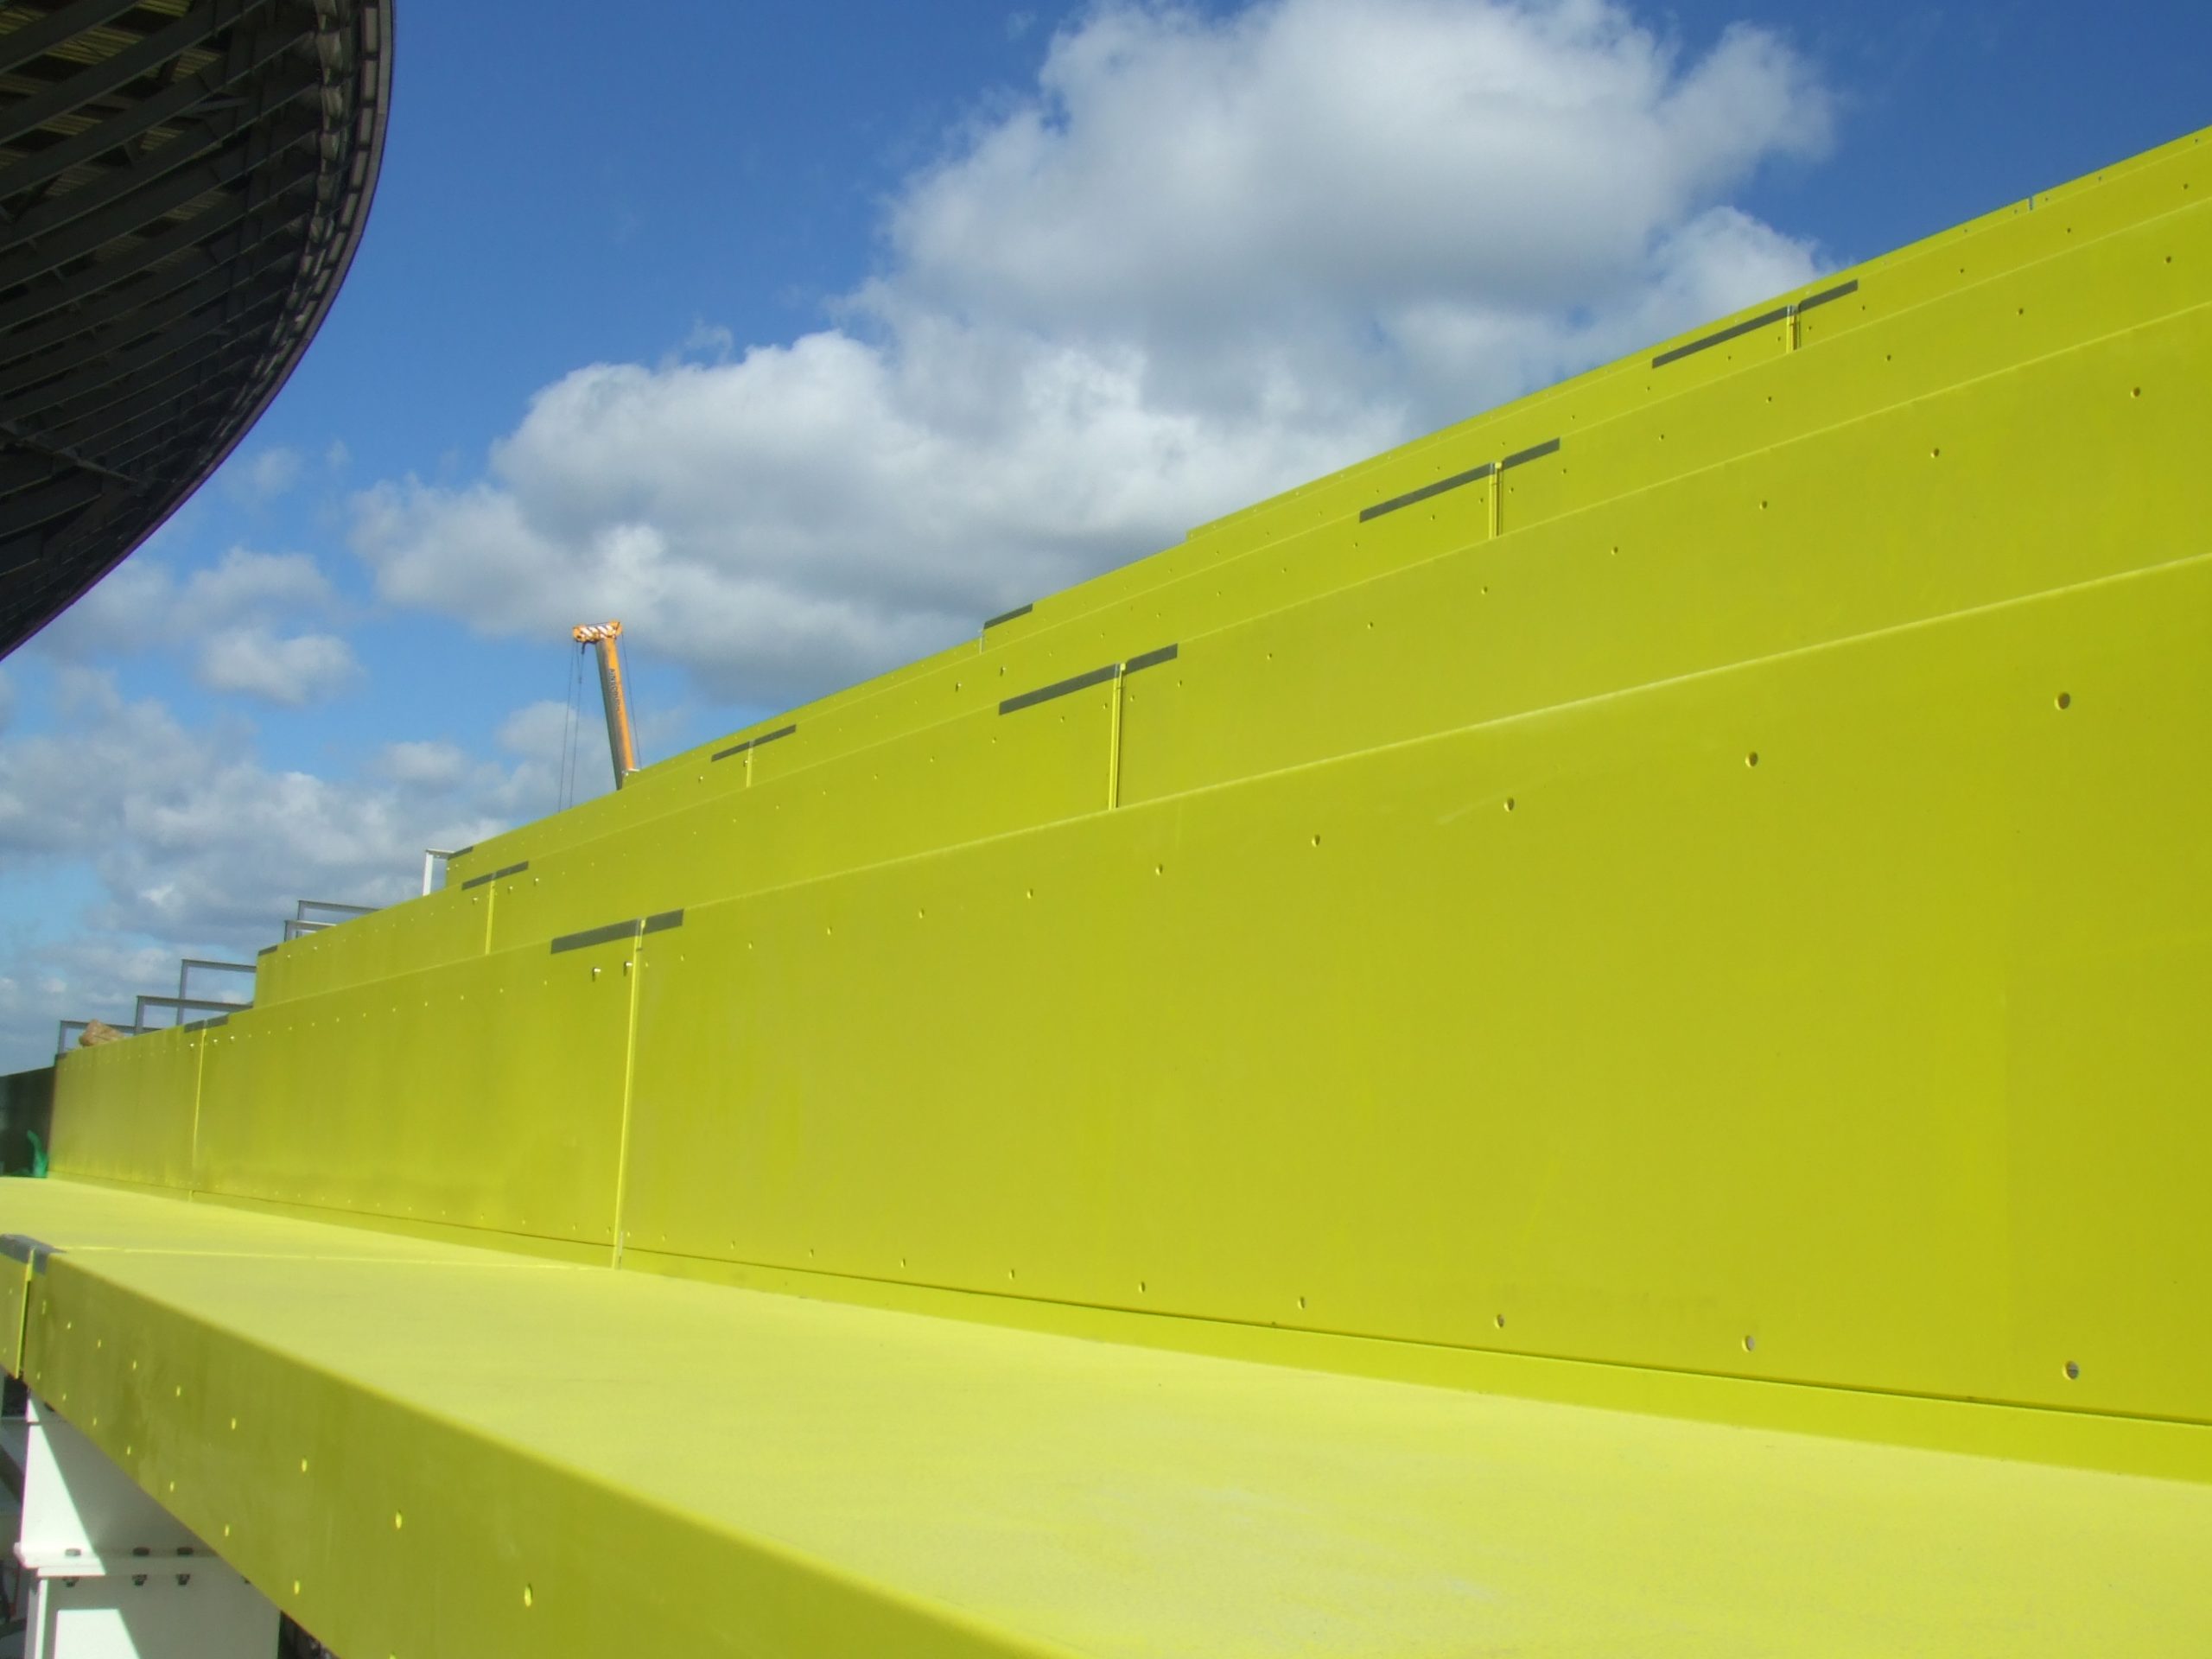 Custom yellow demountable SPS stadium seating for LONDON 2012